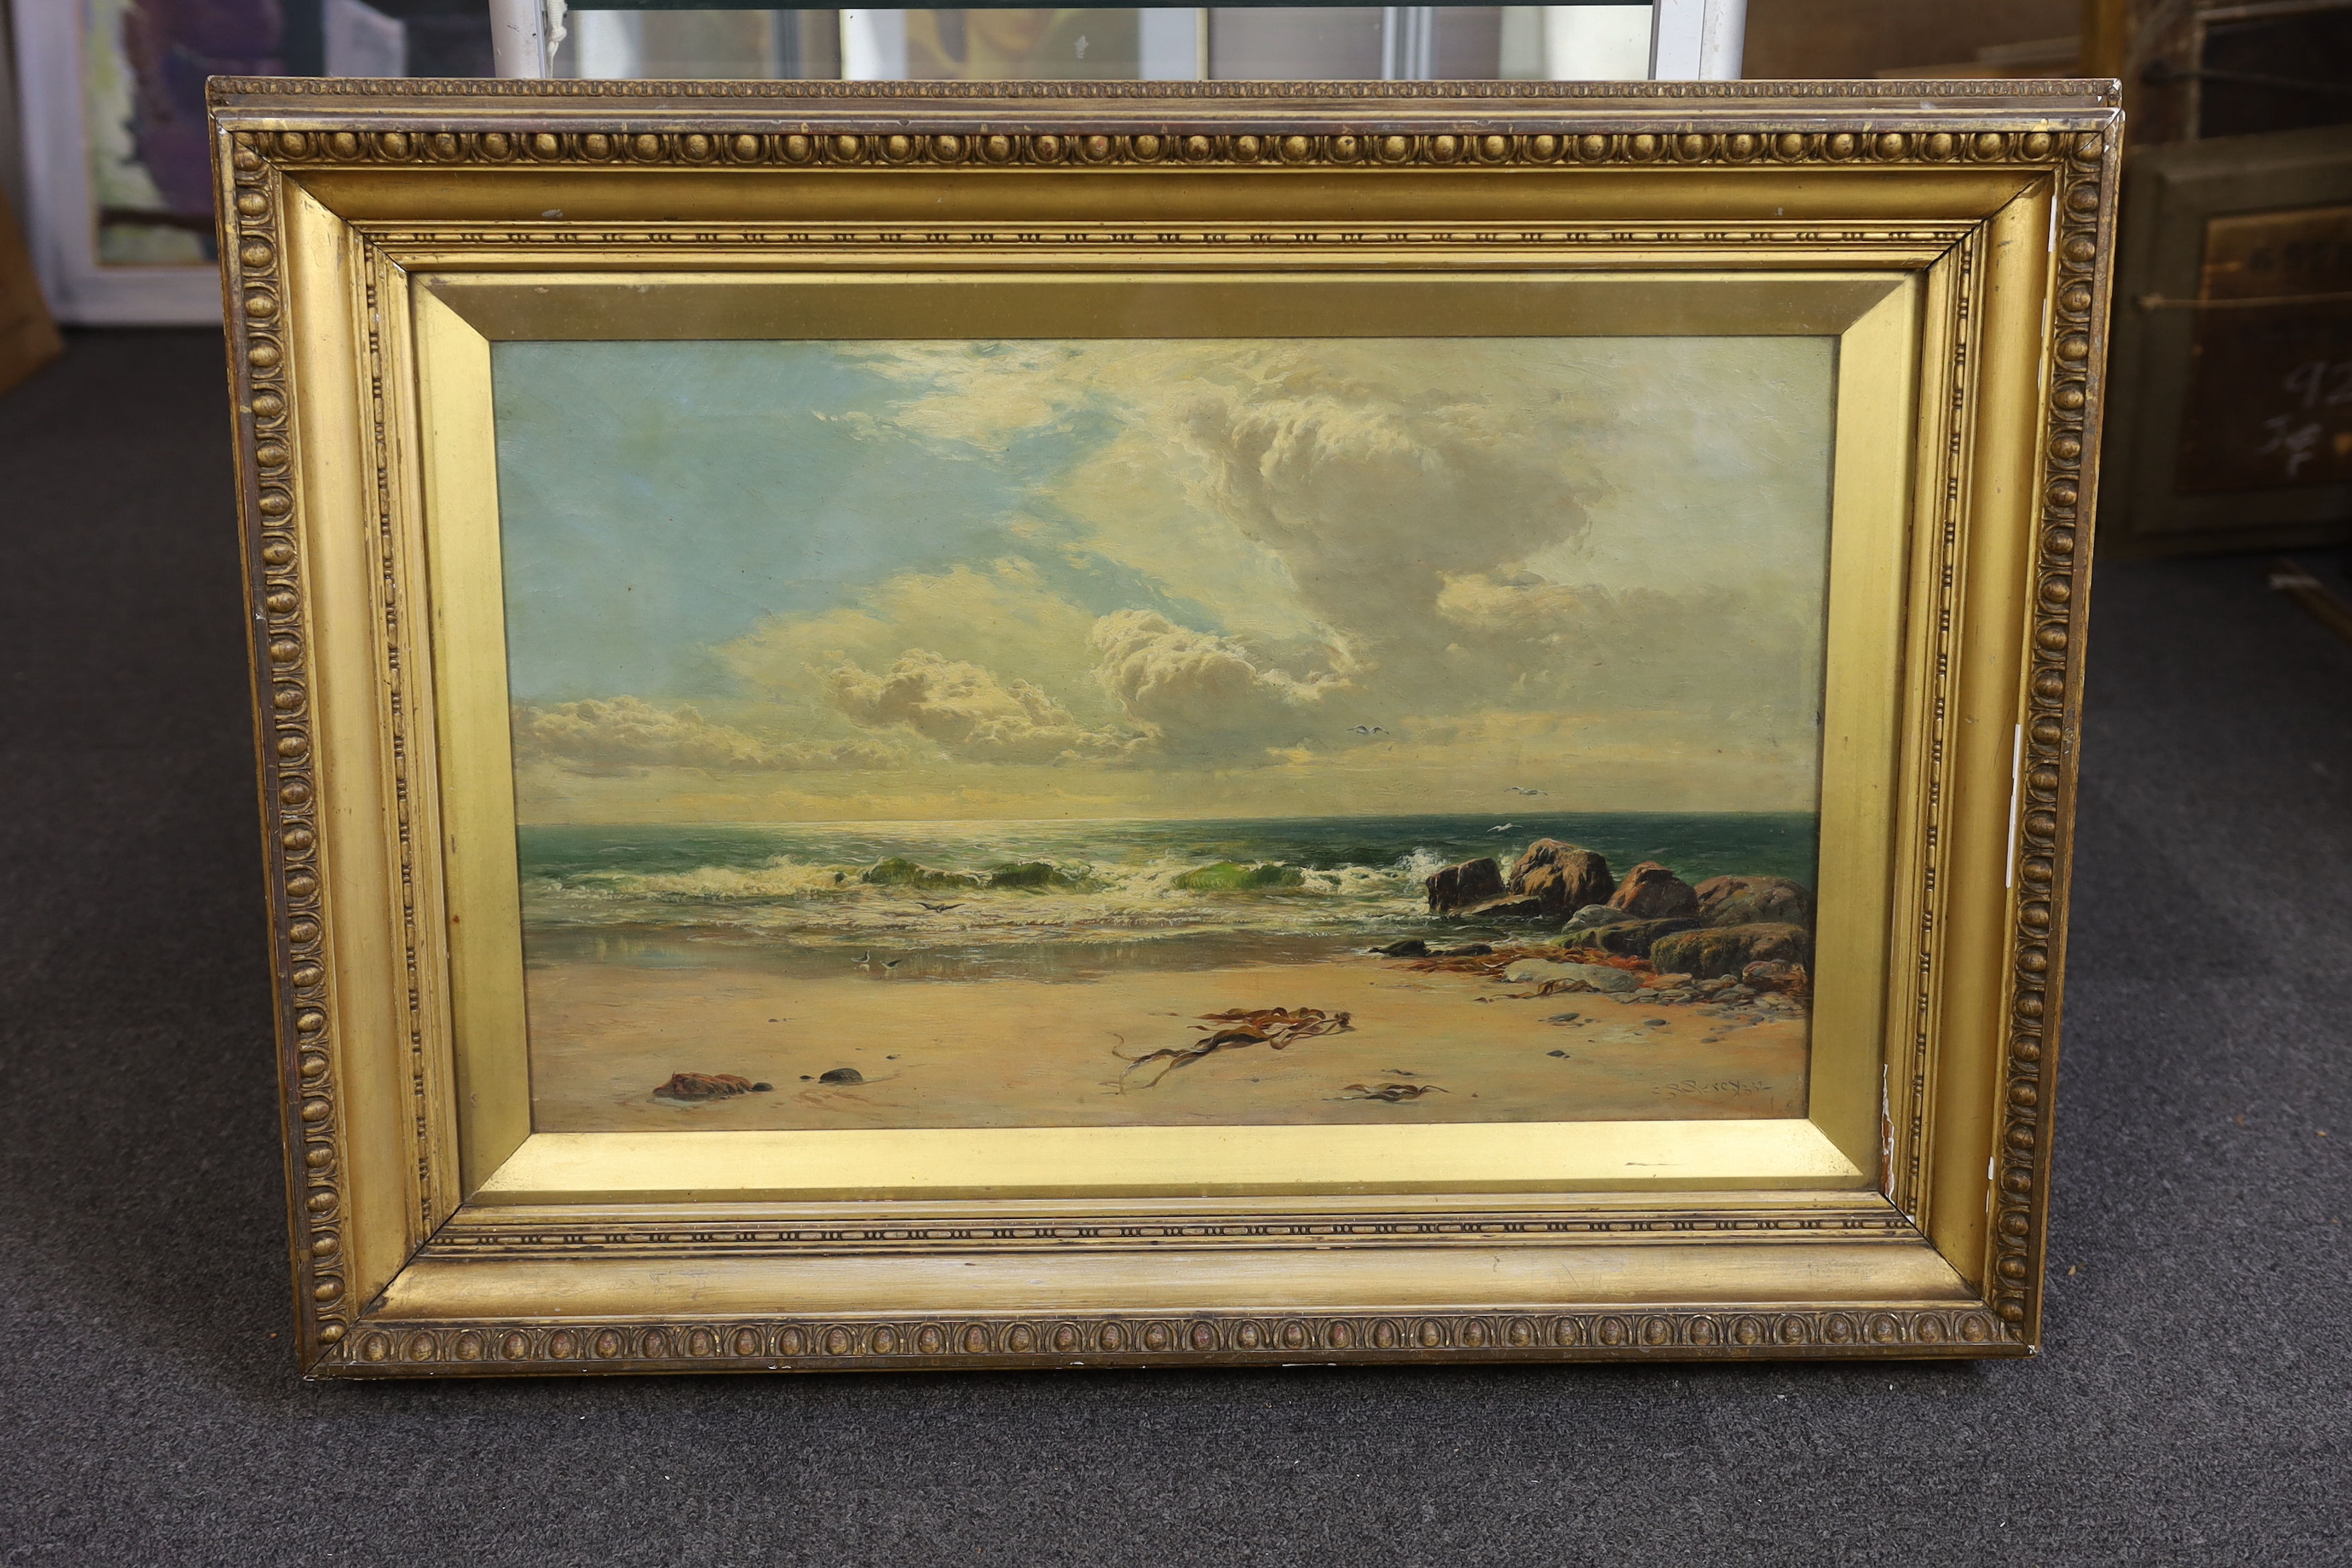 Sidney Richard Percy (British, 1821-1886), 'No 2. A Bit of The Atlantic', oil on canvas, 40 x 65cm